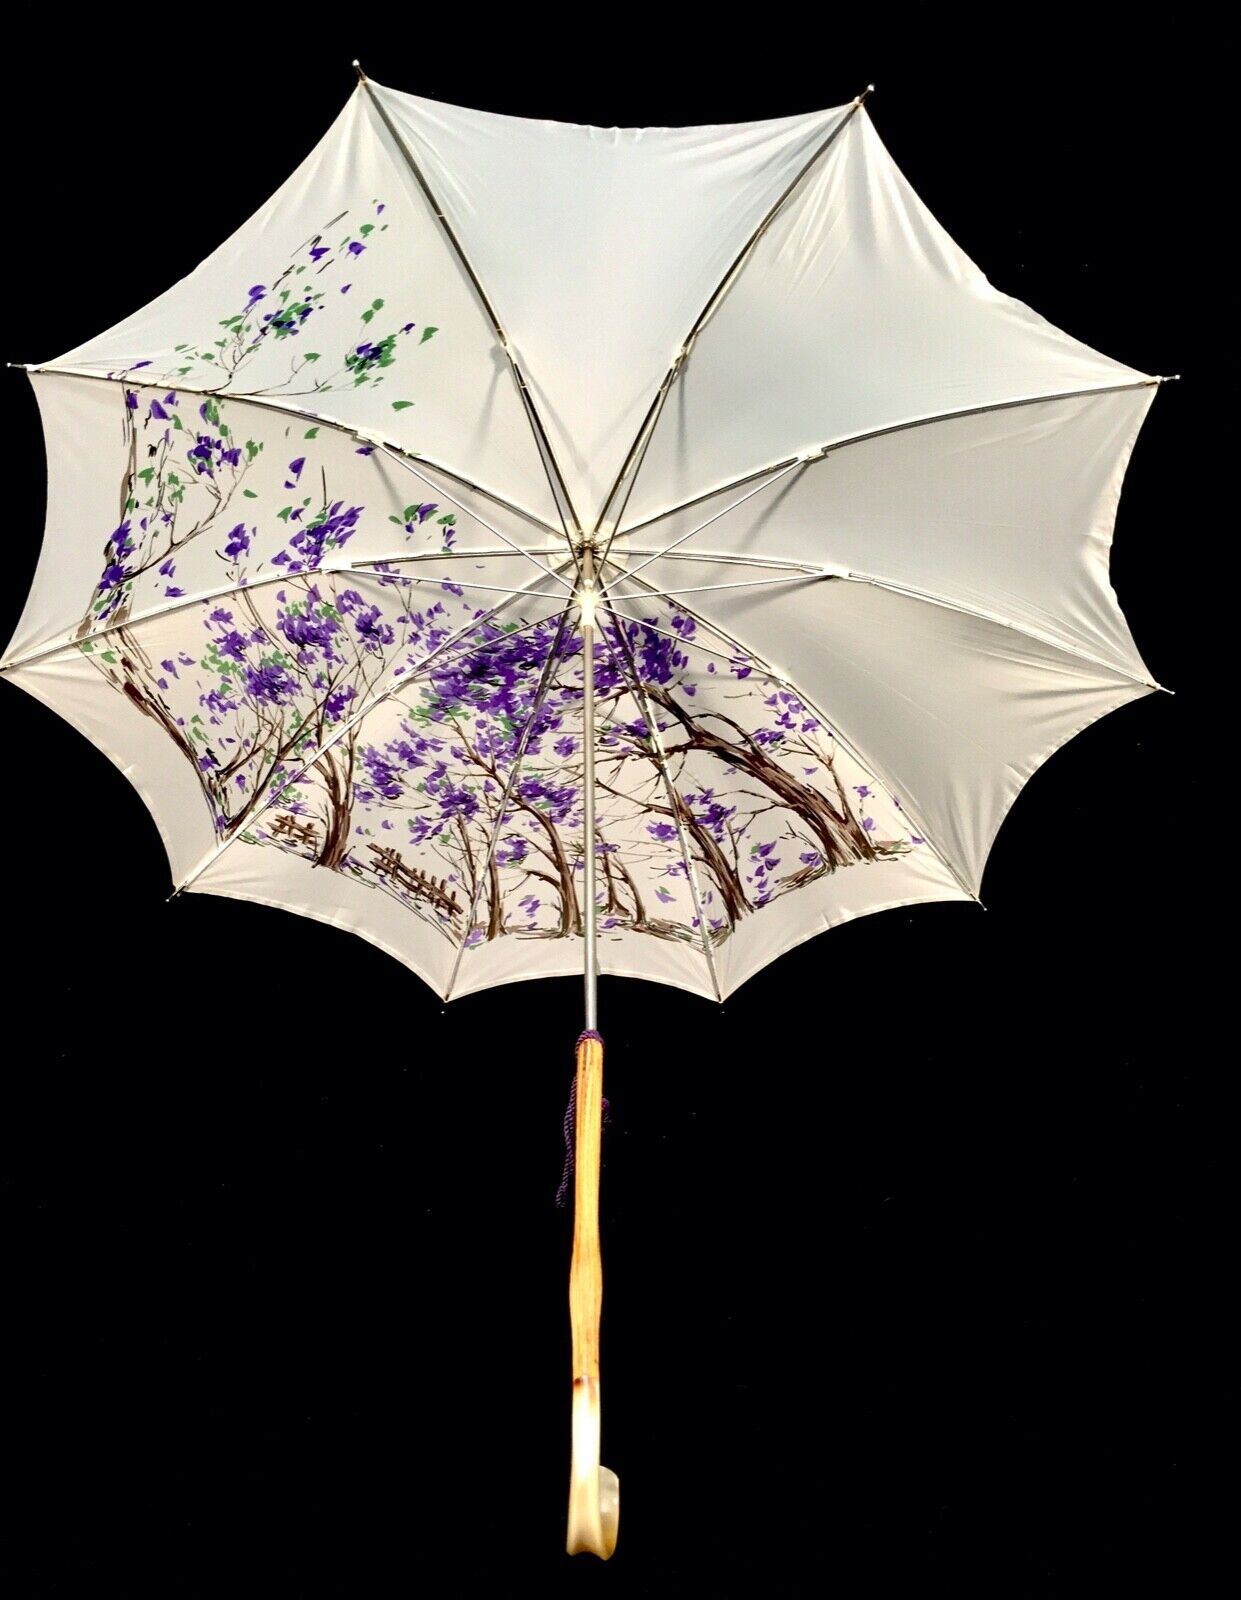 Vintage Clothing - 1950s / 60s Ladies Umbrella / Parasol / Fully Working Purple